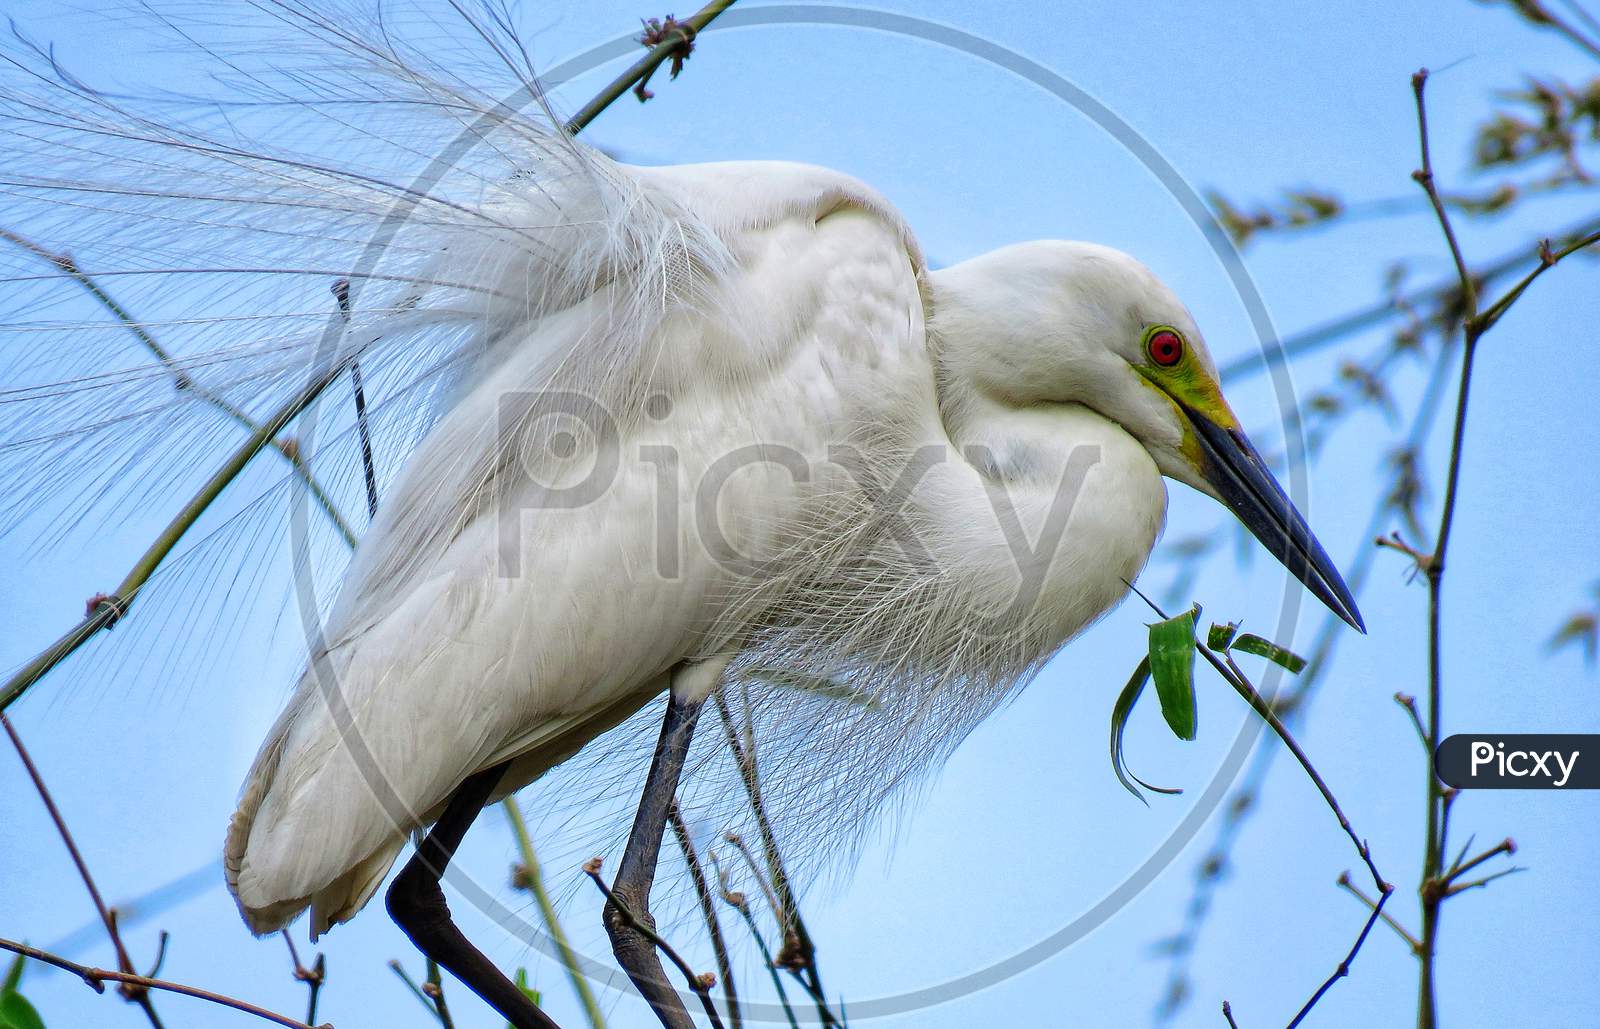 Great white heron ardea cinerea,Great white heron on the tree,beautiful white bird on the tree.